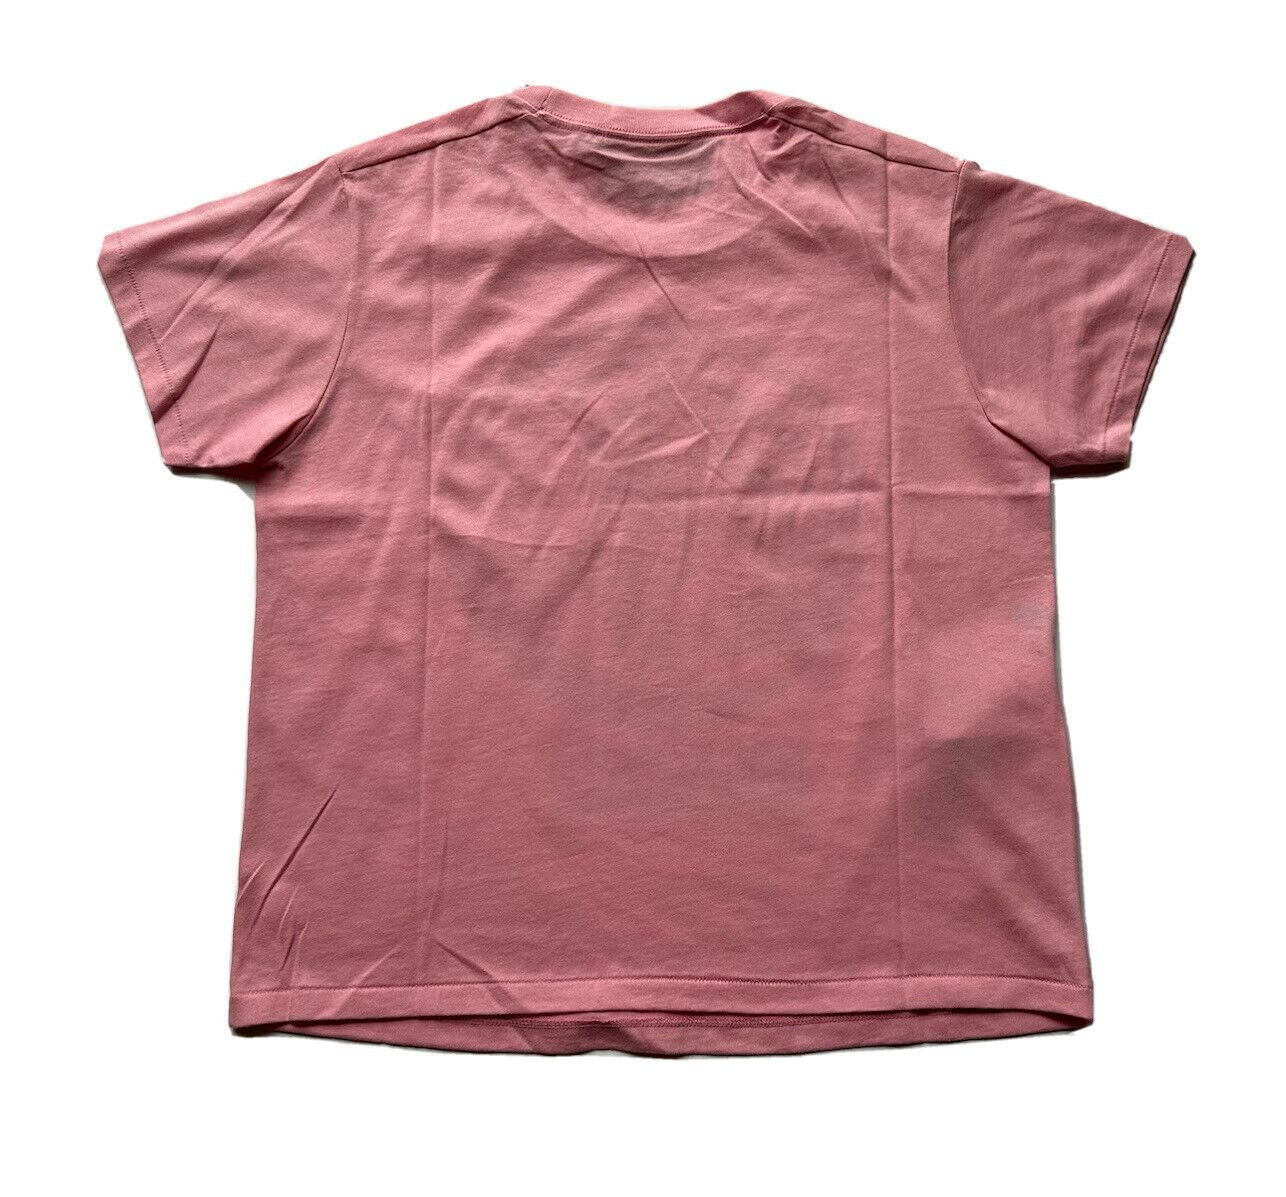 Neu mit Etikett: Gucci Donald Duck Jersey Rosa T-Shirt XS 644674 Hergestellt in Italien